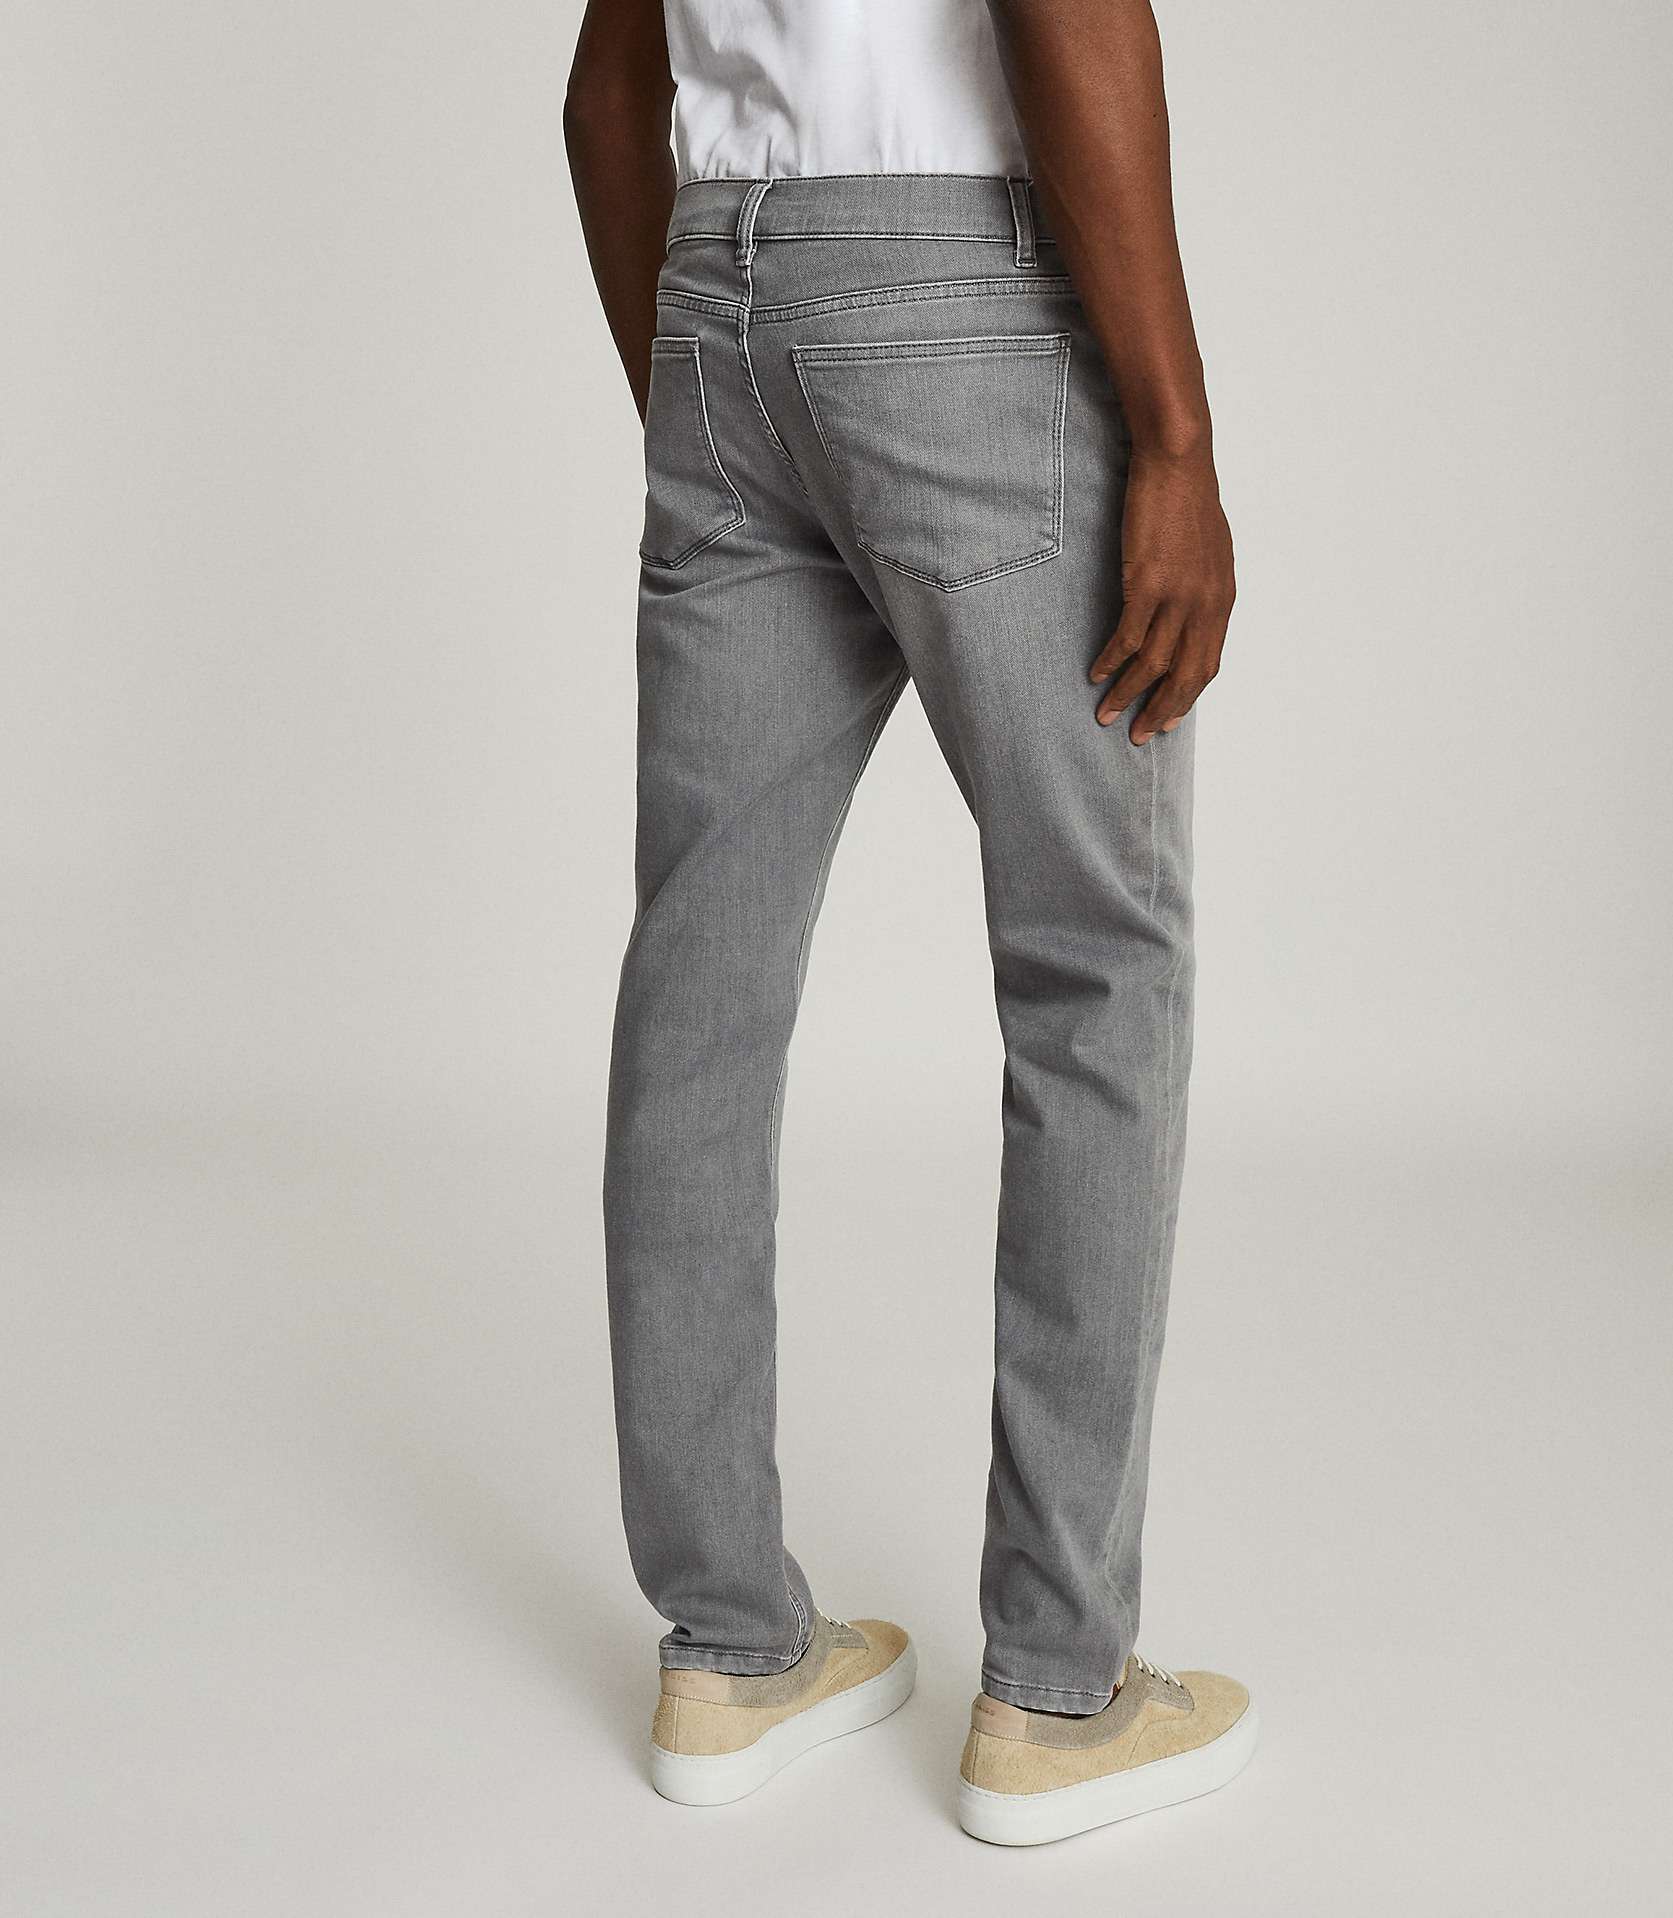 Reiss Adana Jersey Stretch Slim Jeans, Grey at John Lewis & Partners